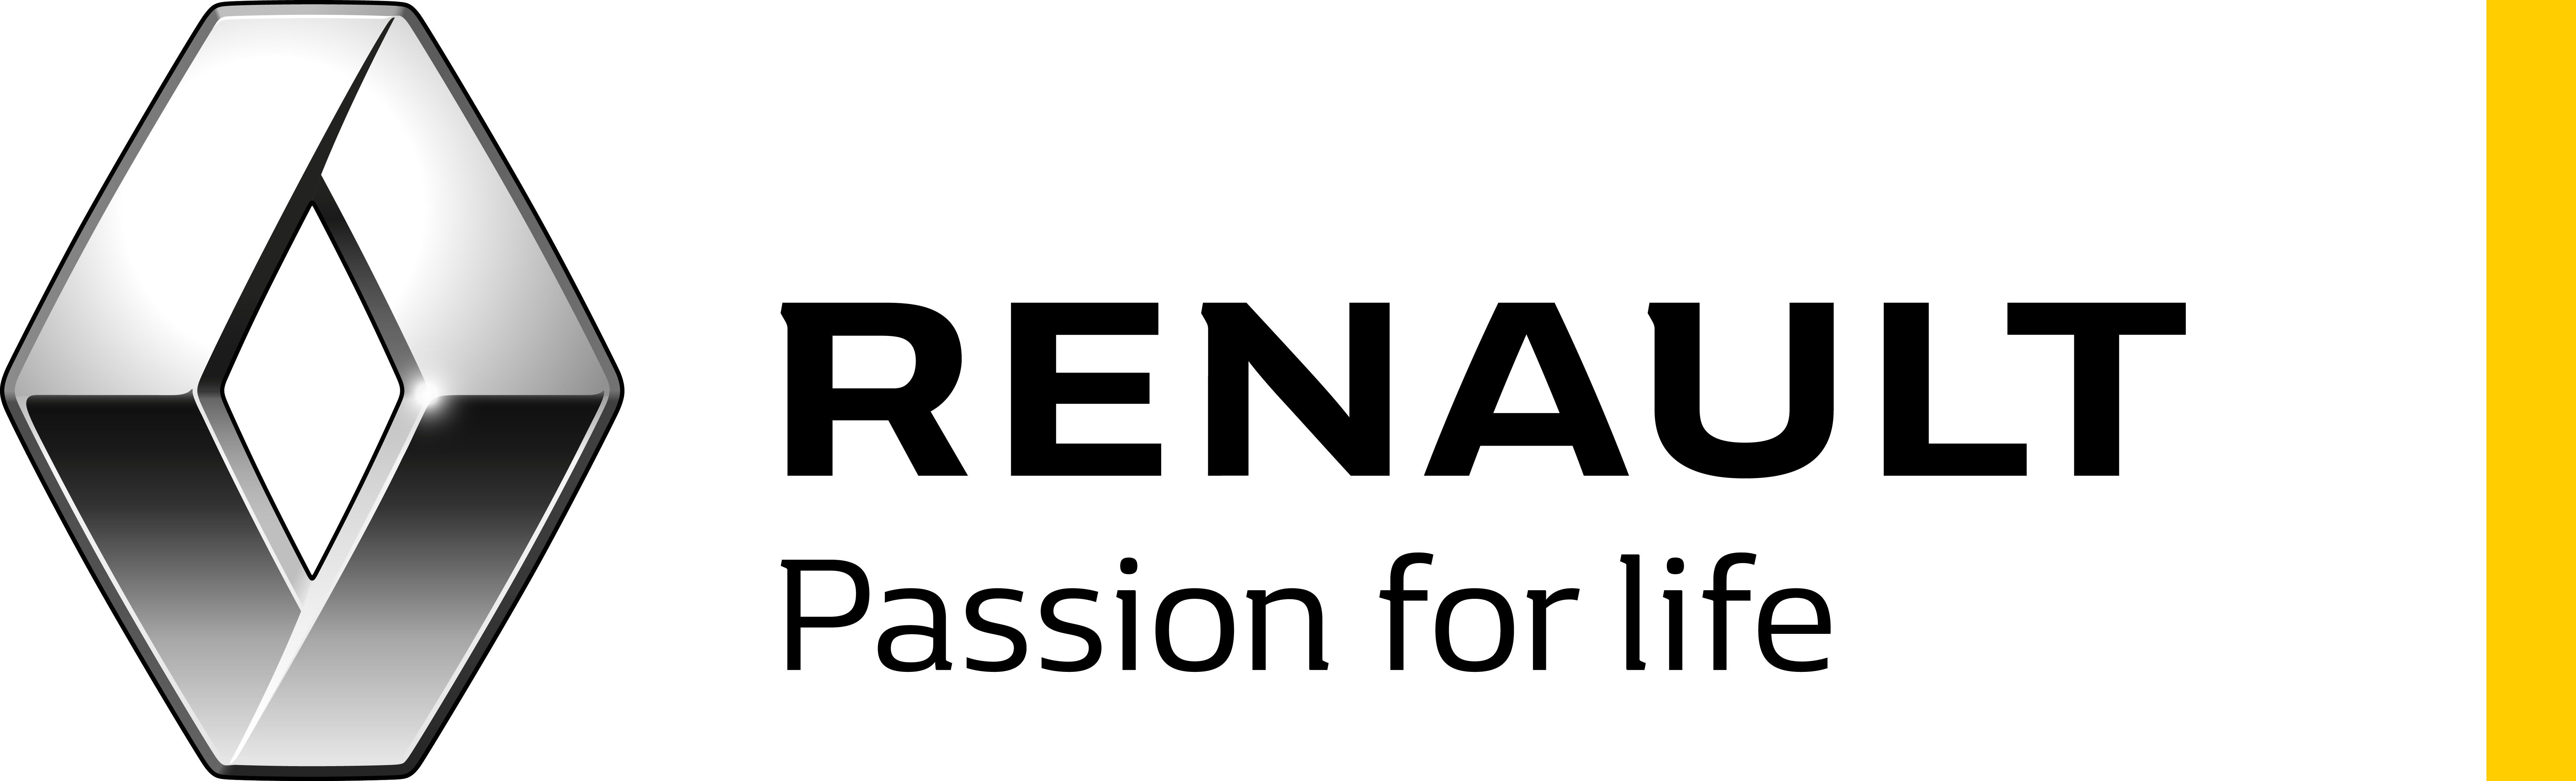 Renault Logo - File:RENAULT LOGO.png - Wikimedia Commons